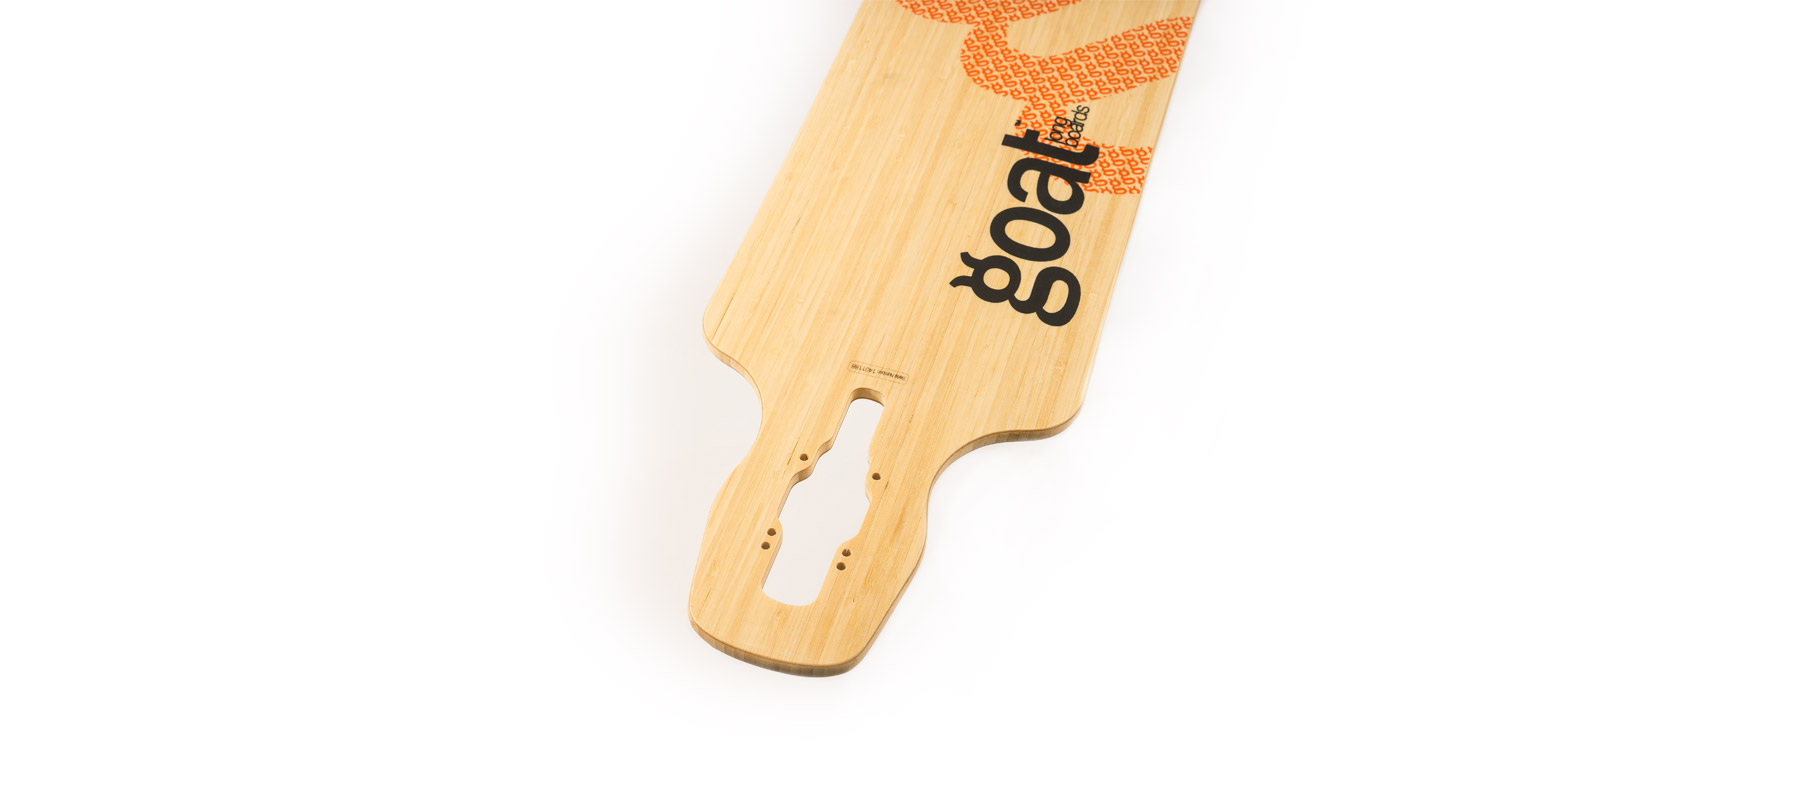 carving longboard bamboo zero1 detalle